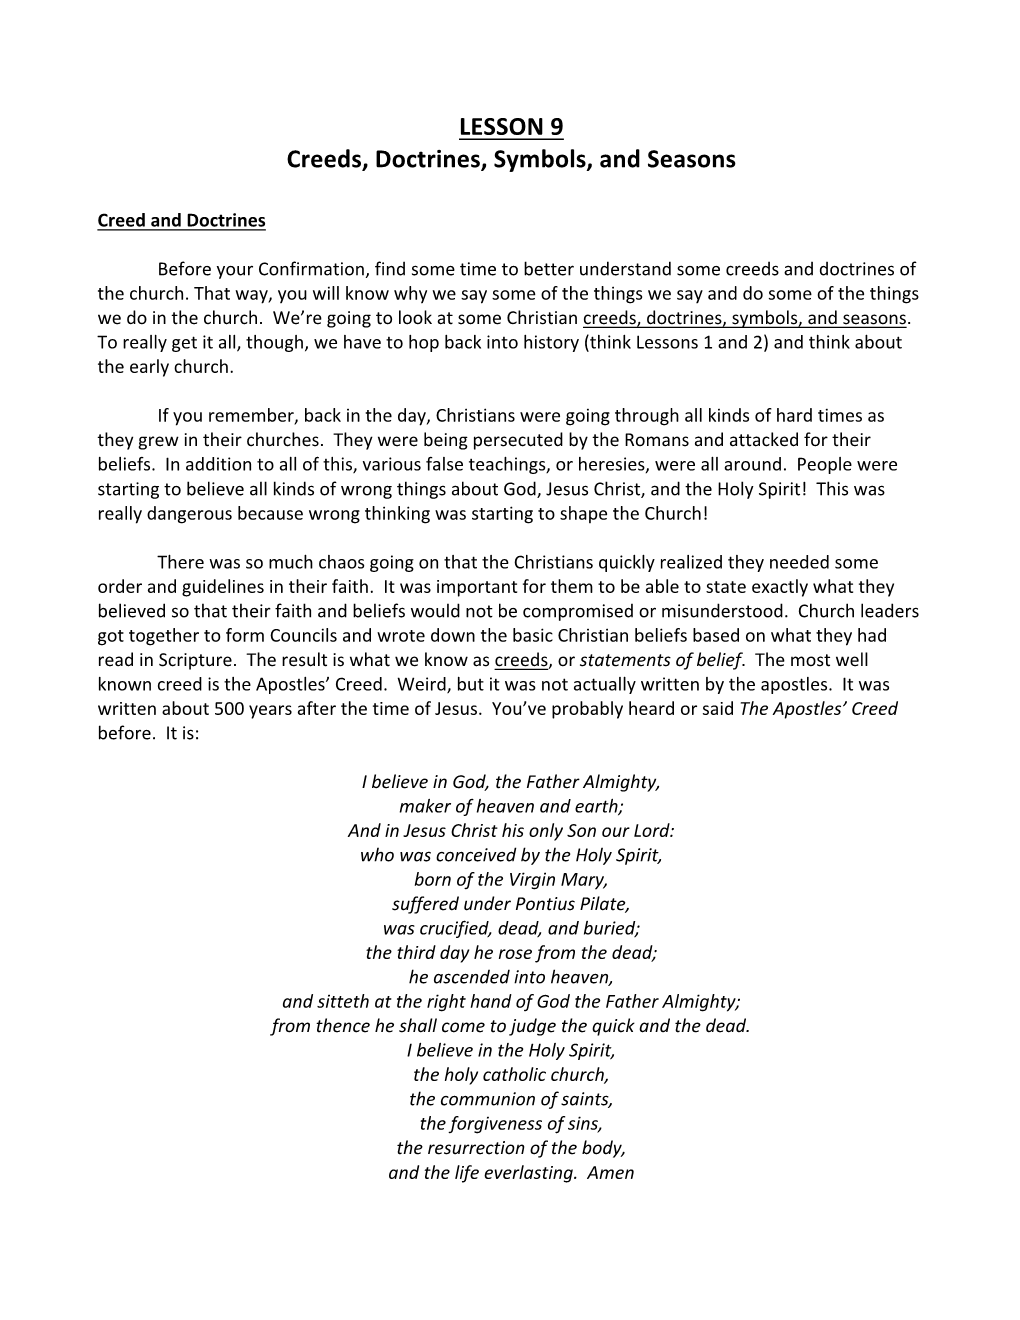 LESSON 9 Creeds, Doctrines, Symbols, and Seasons